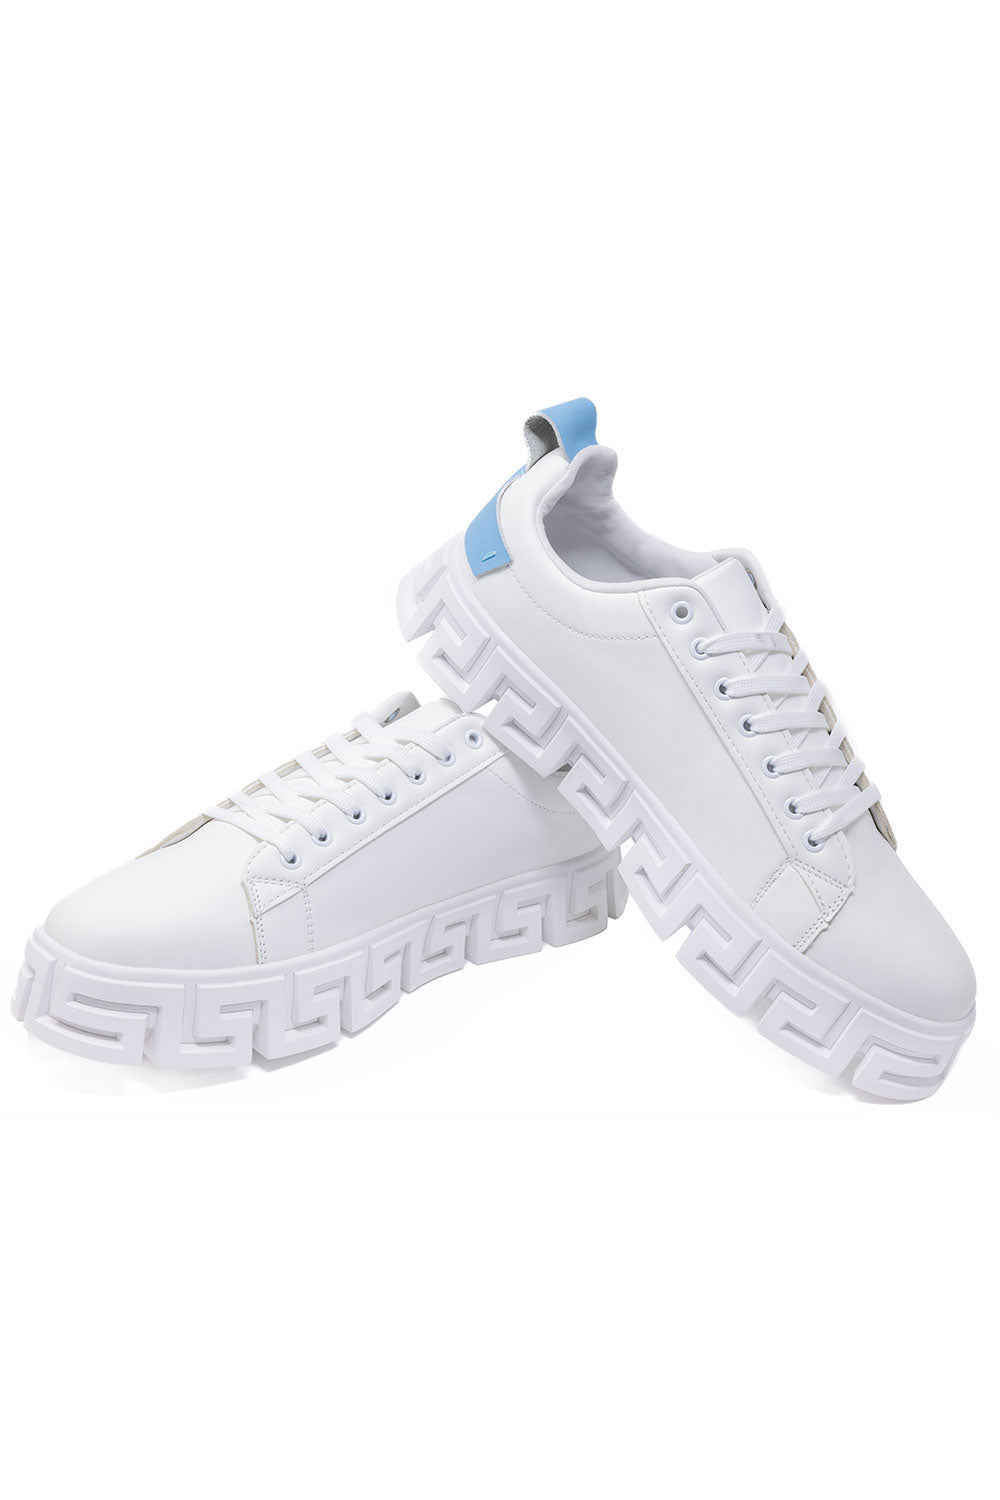 Barabas Men's Greek Key Sole Pattern Premium Sneakers 4SK06 White